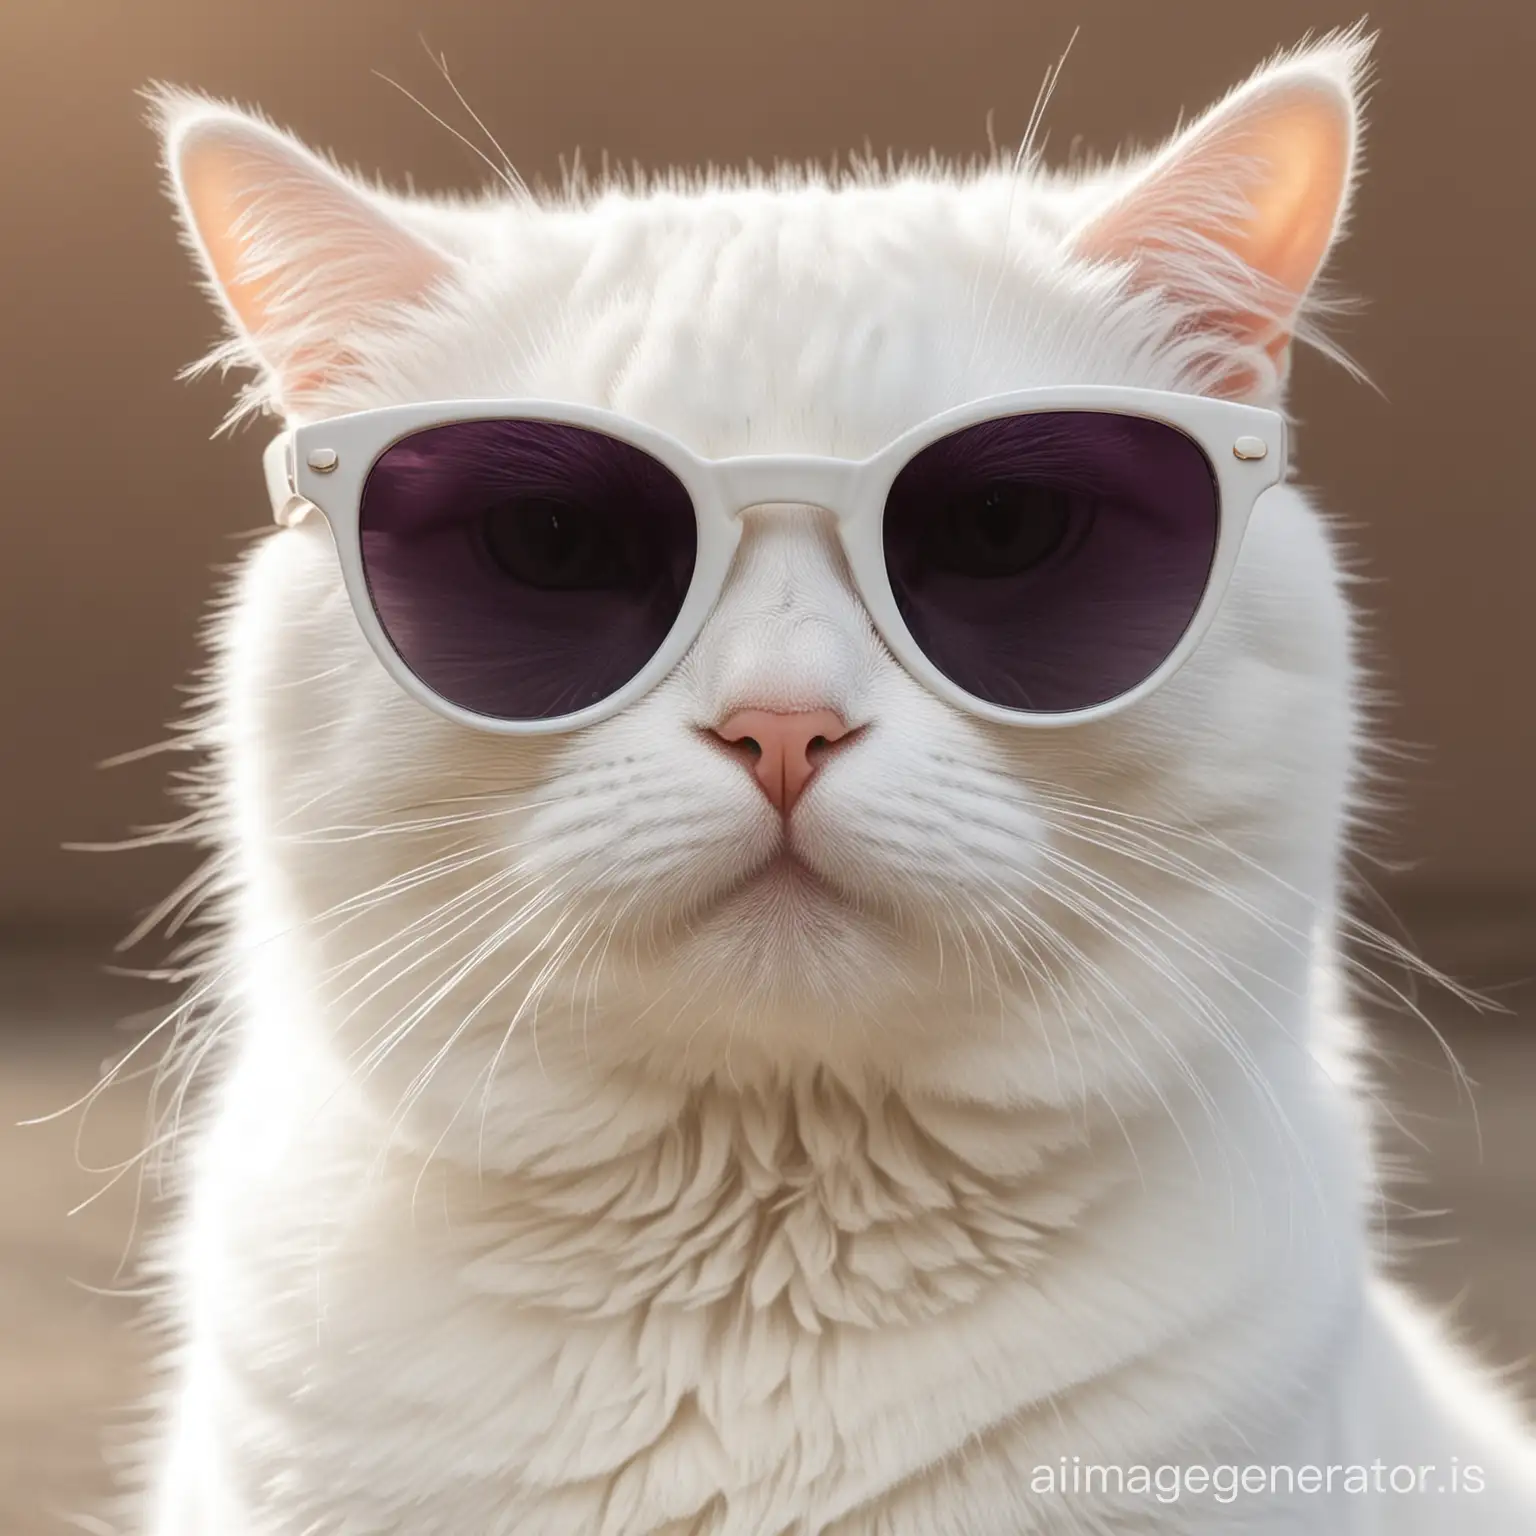 cute white cat wearing sunglasses